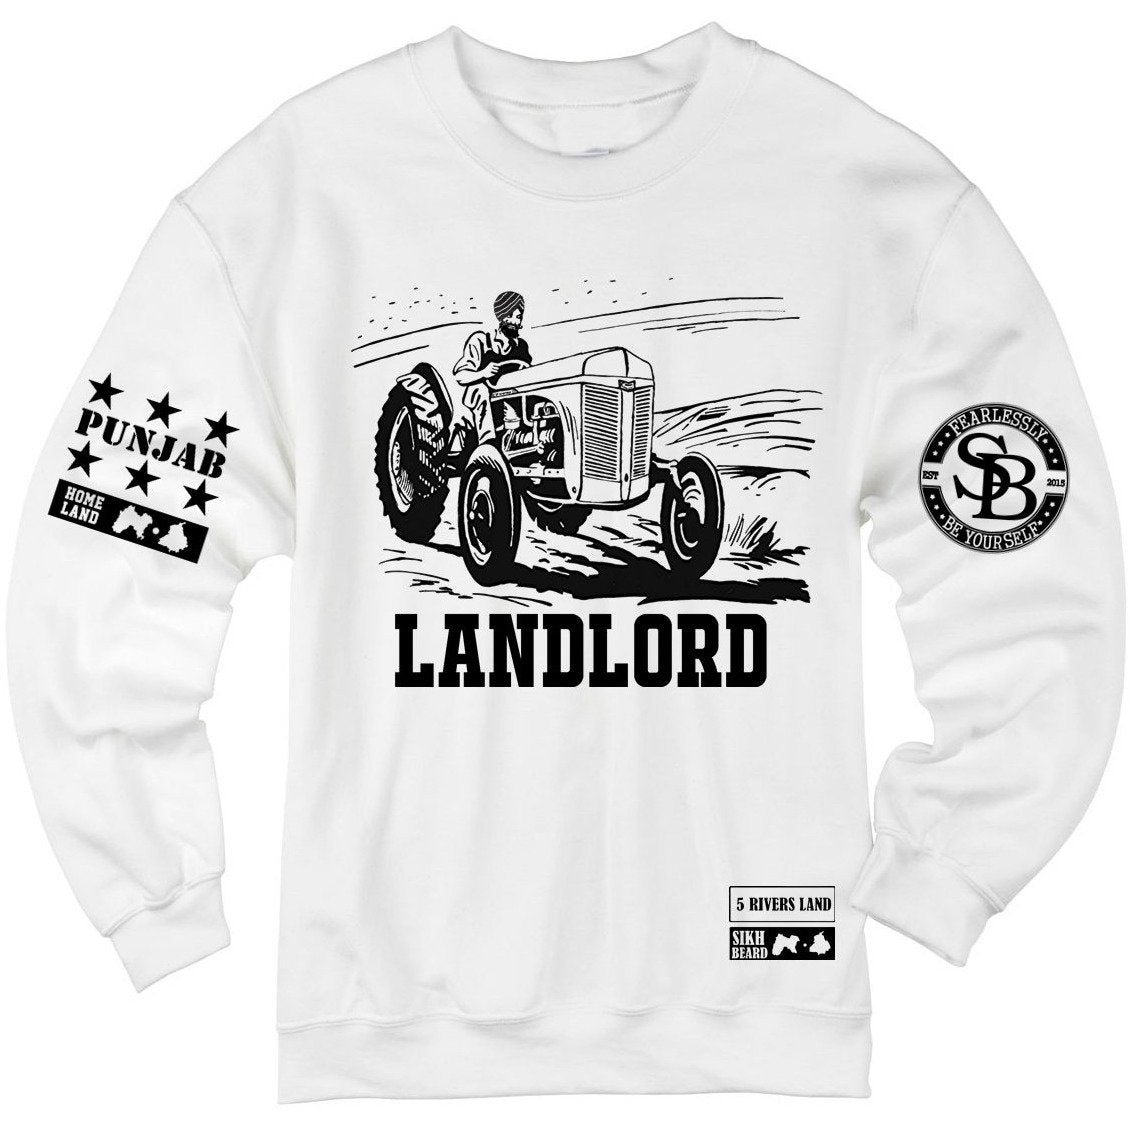 Landlord - Crew neck Sweatshirt